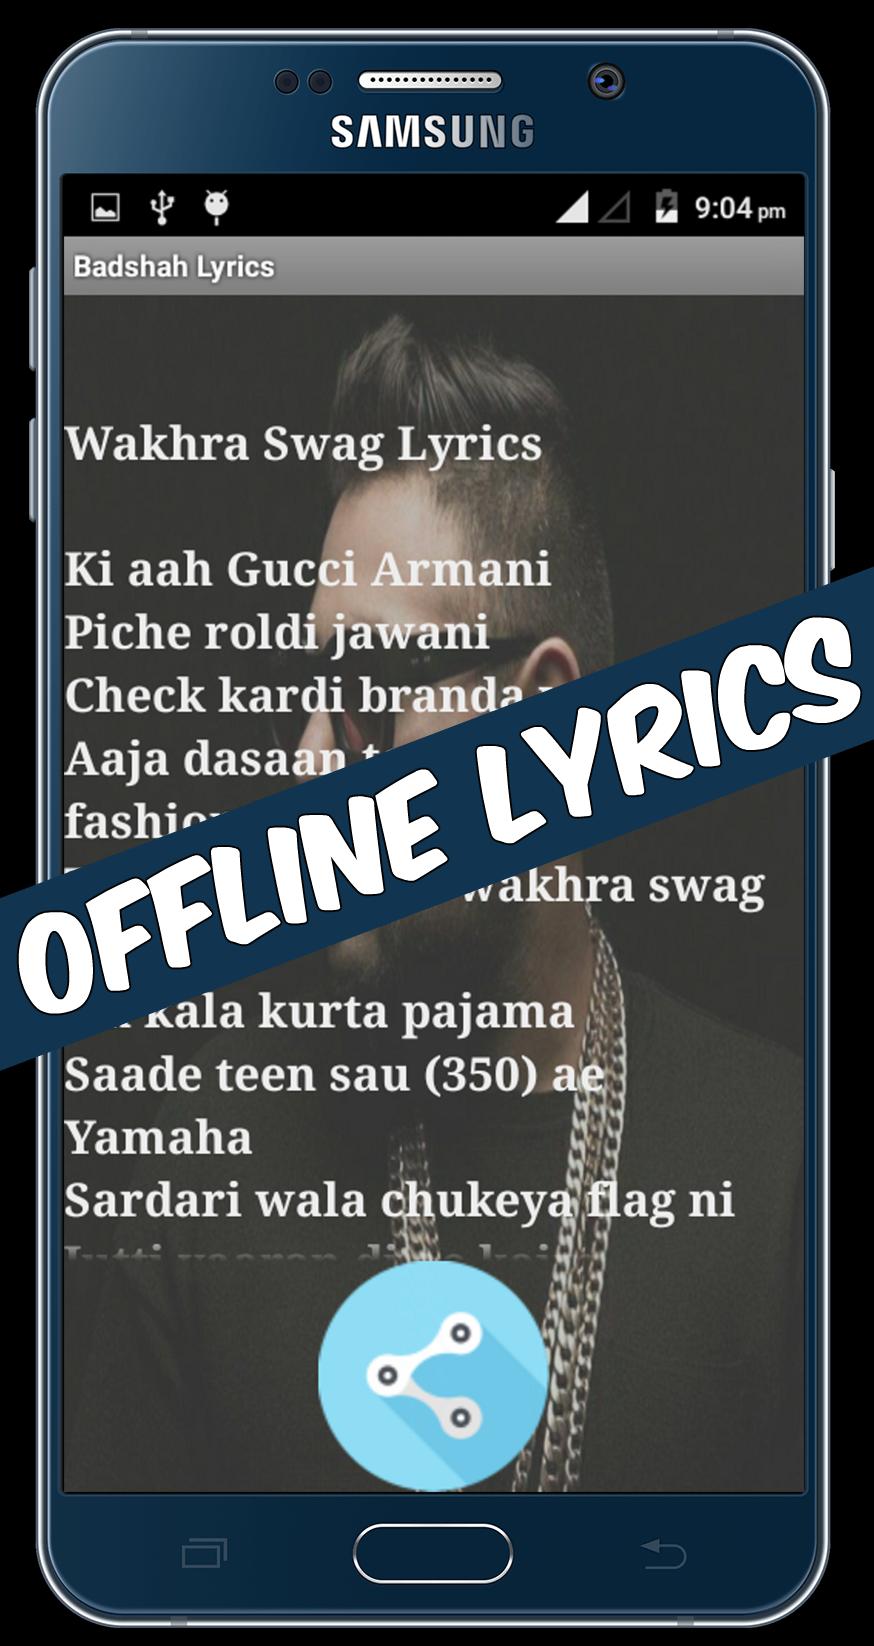 Badshah Lyrics for Android - APK Download